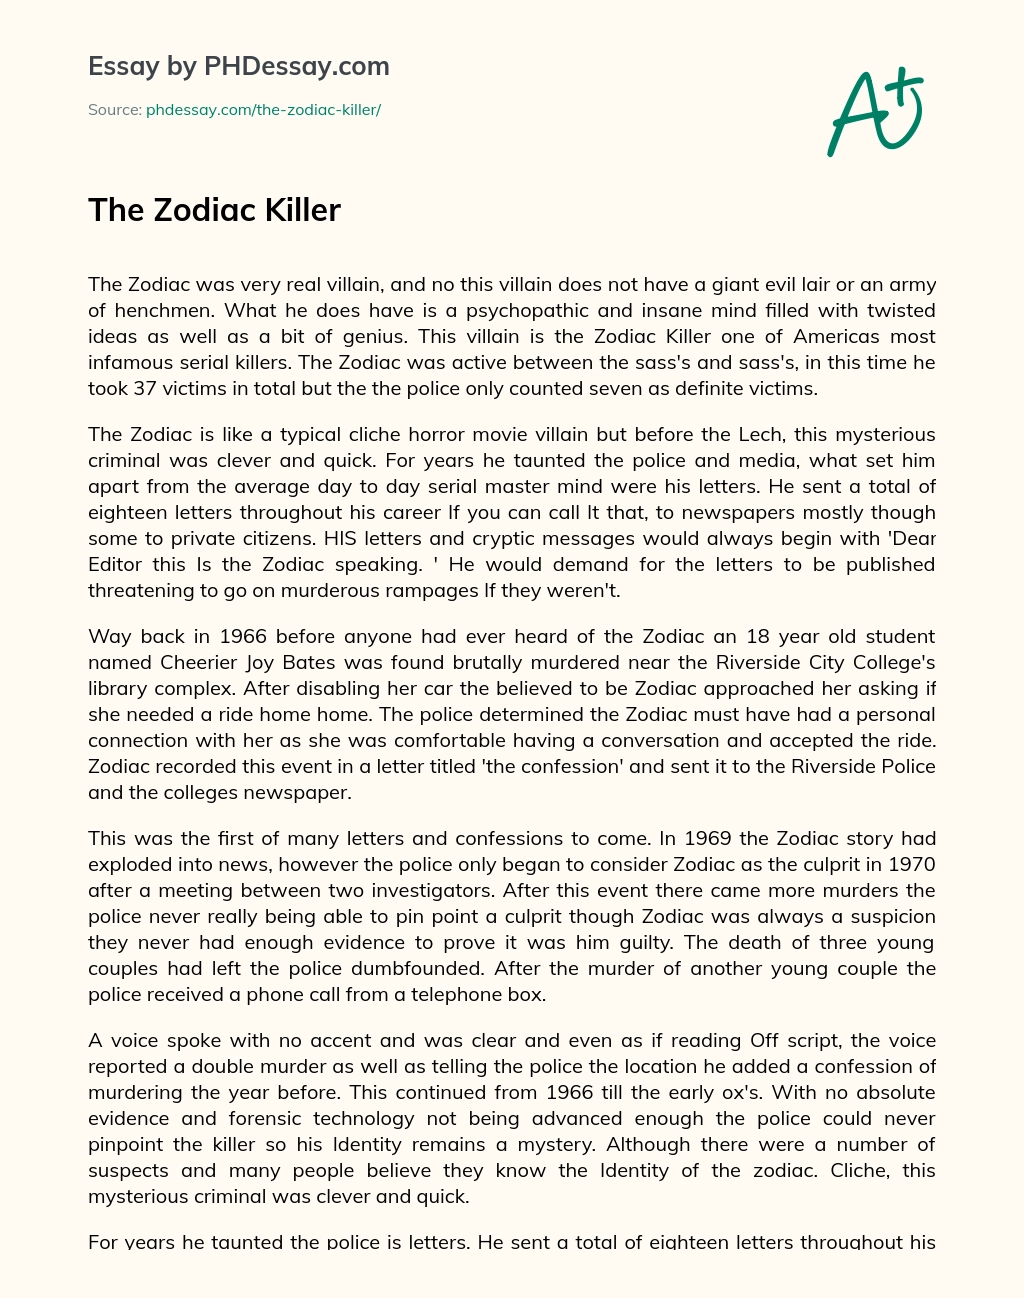 The Zodiac Killer essay